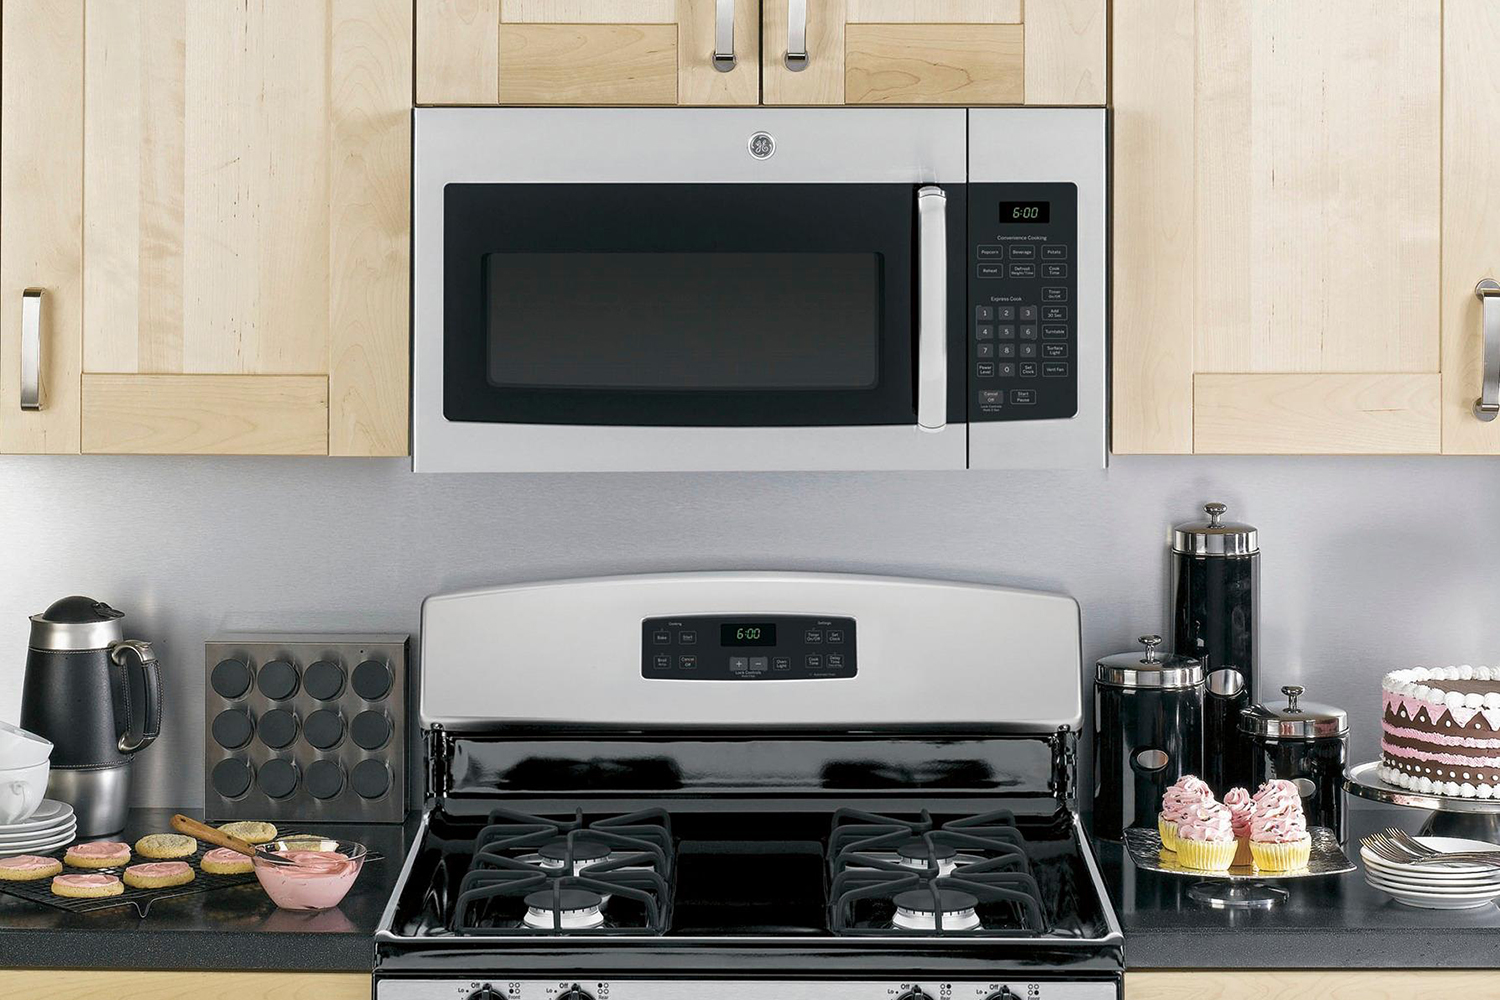 How Long All Major Household Appliance Should Last On Average